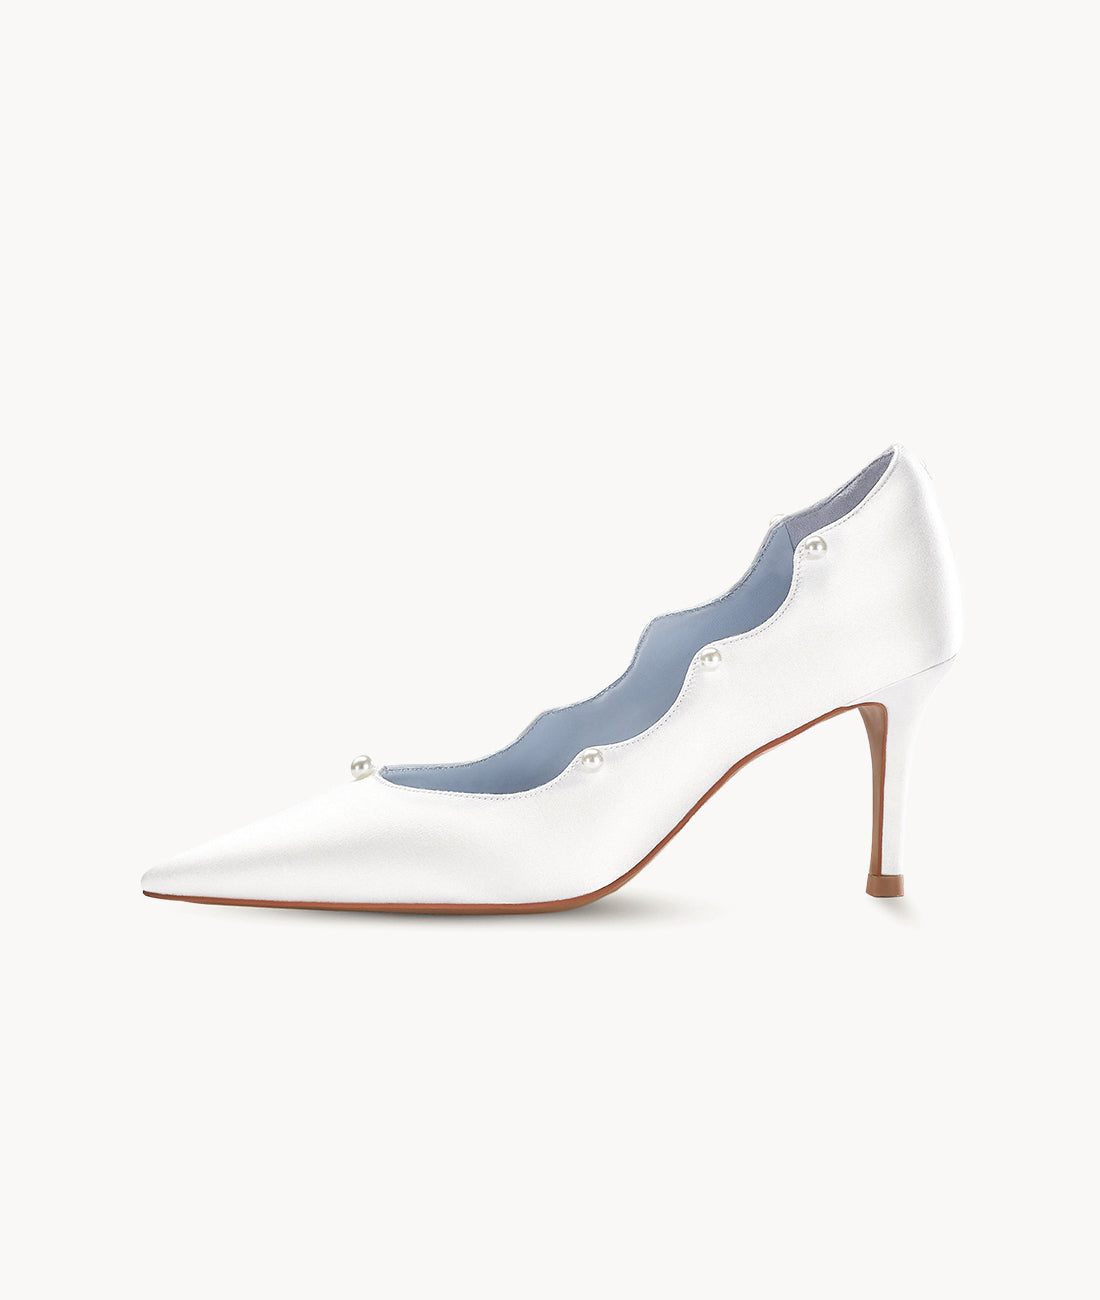 7or9 Bridal Series High-end Comfortable White Silk Upper Heels for Women 70mm/2.75" Kitten Heels - White Chocolate